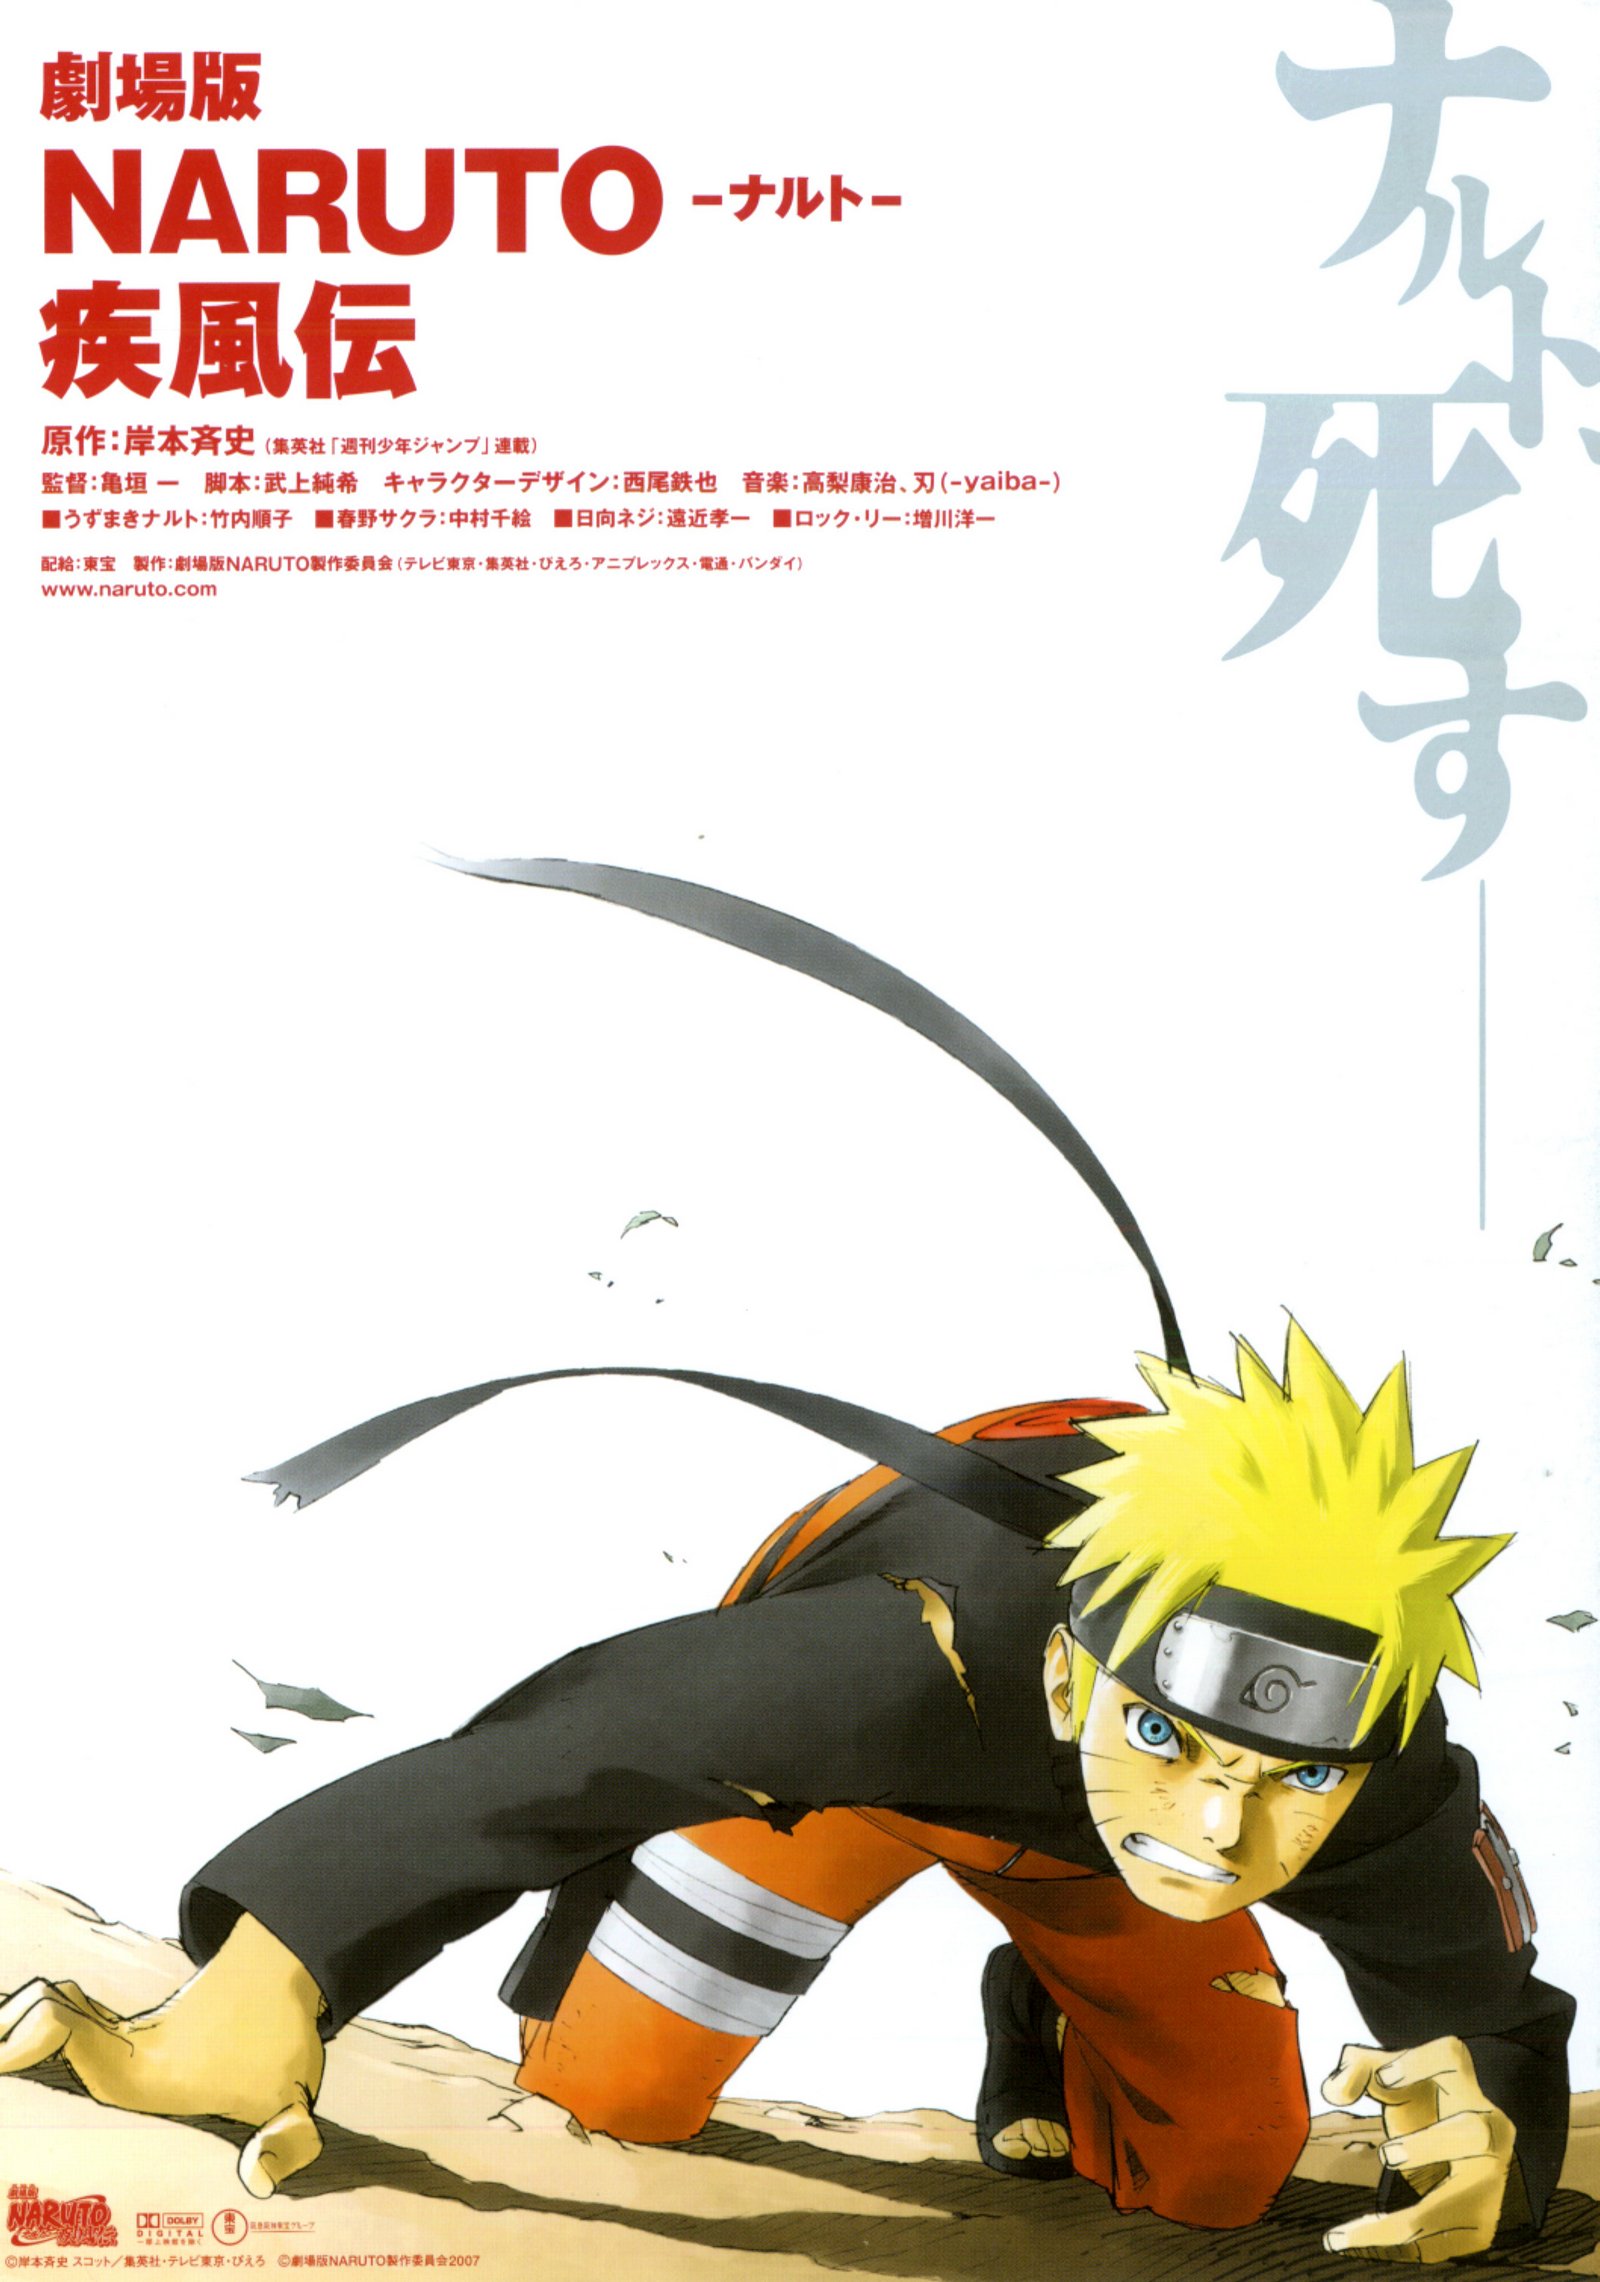 Naruto Shippūden o Filme: A Torre Perdida, Wiki Naruto